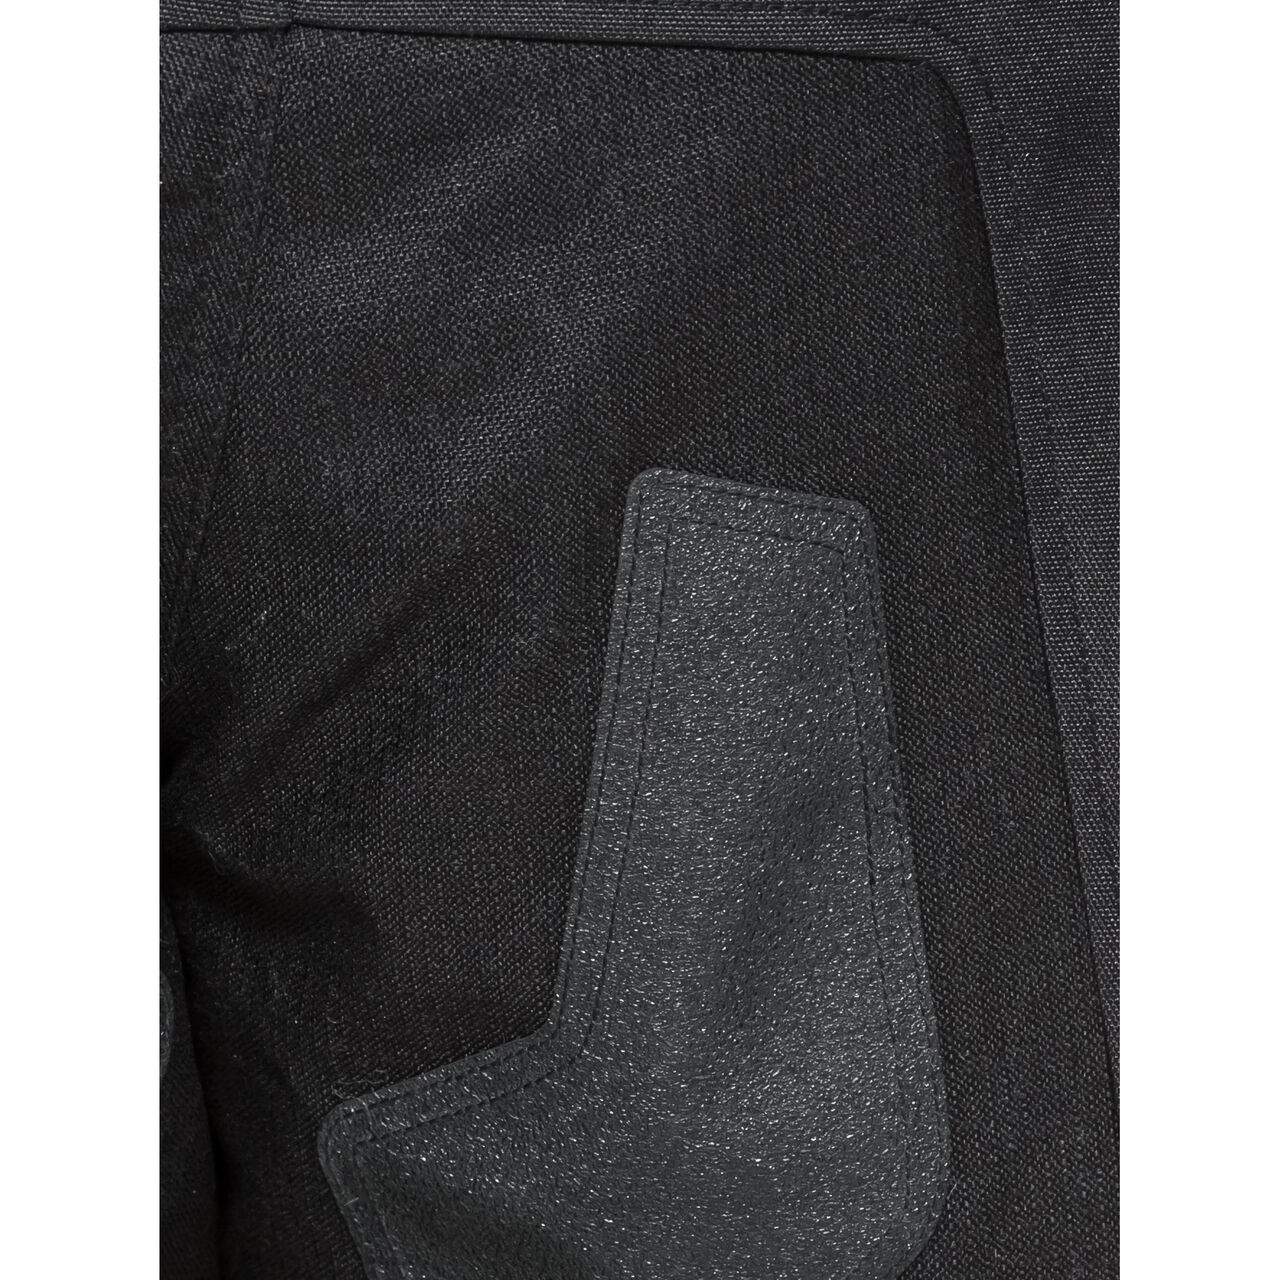 Cedar WP Textilhose schwarz M